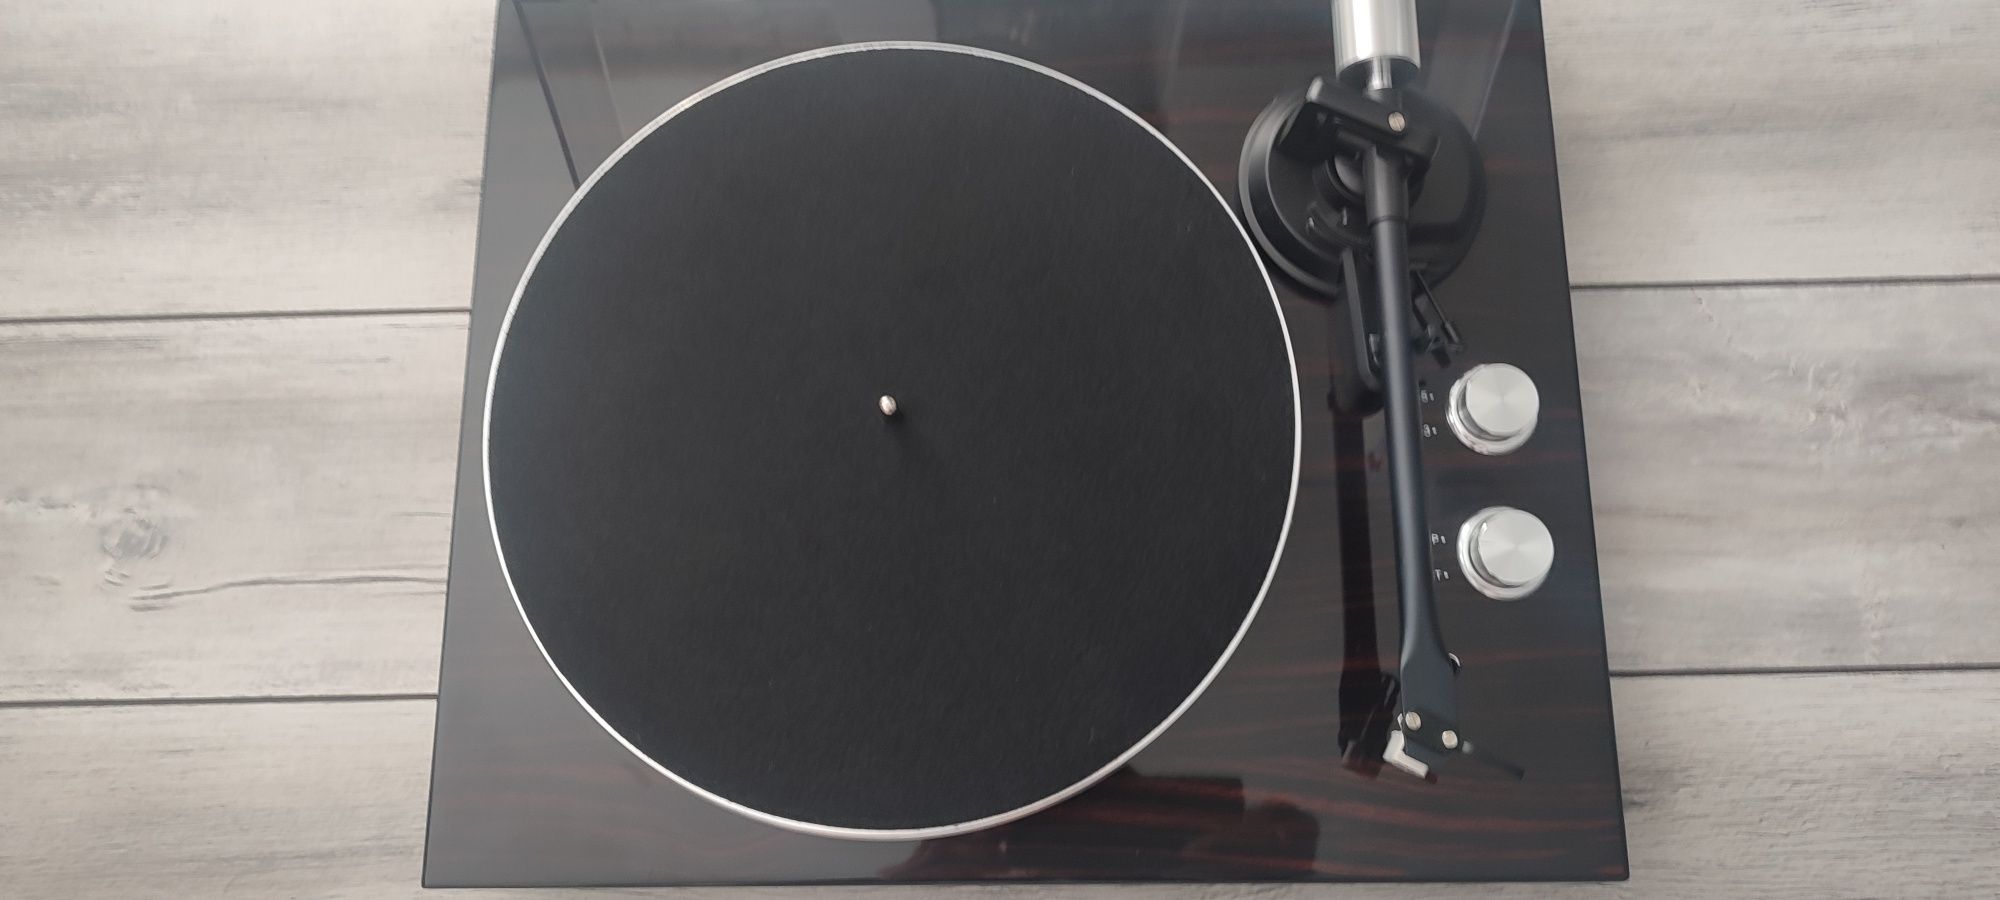 Gramofon Argon audio model Argttma